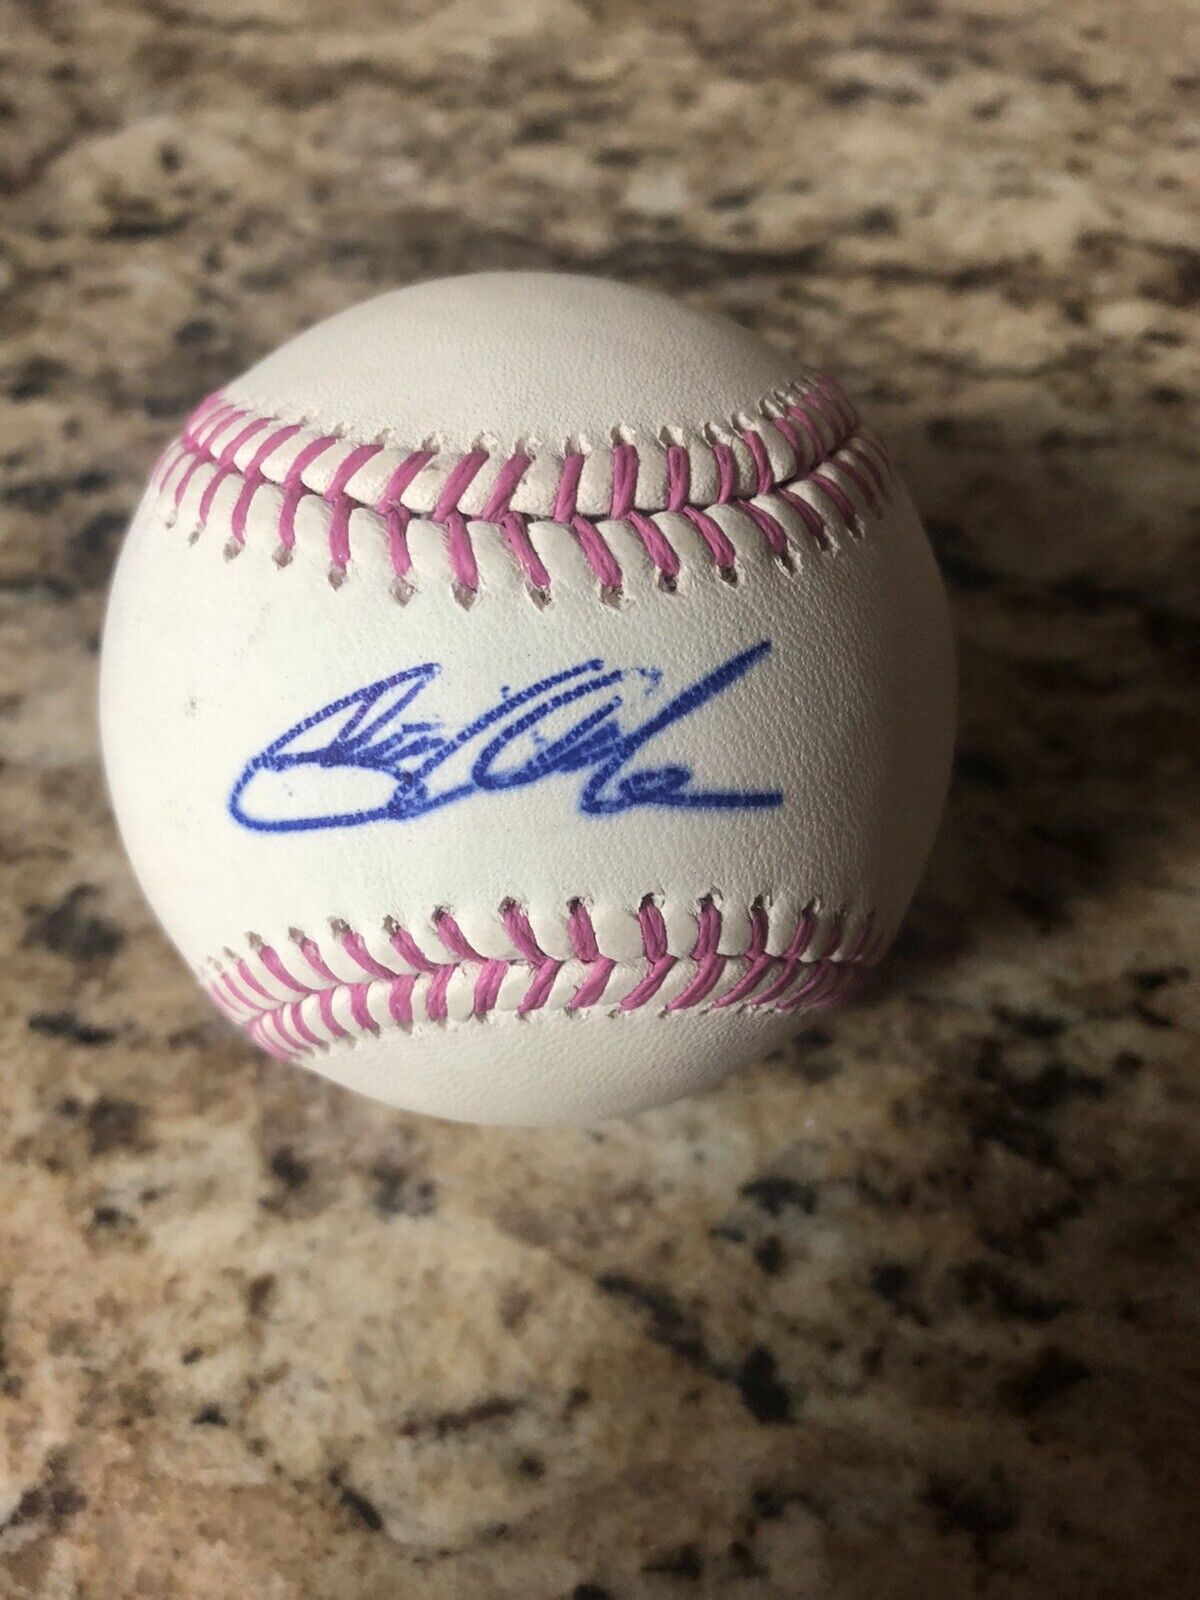 gerrit cole autographed pink baseball